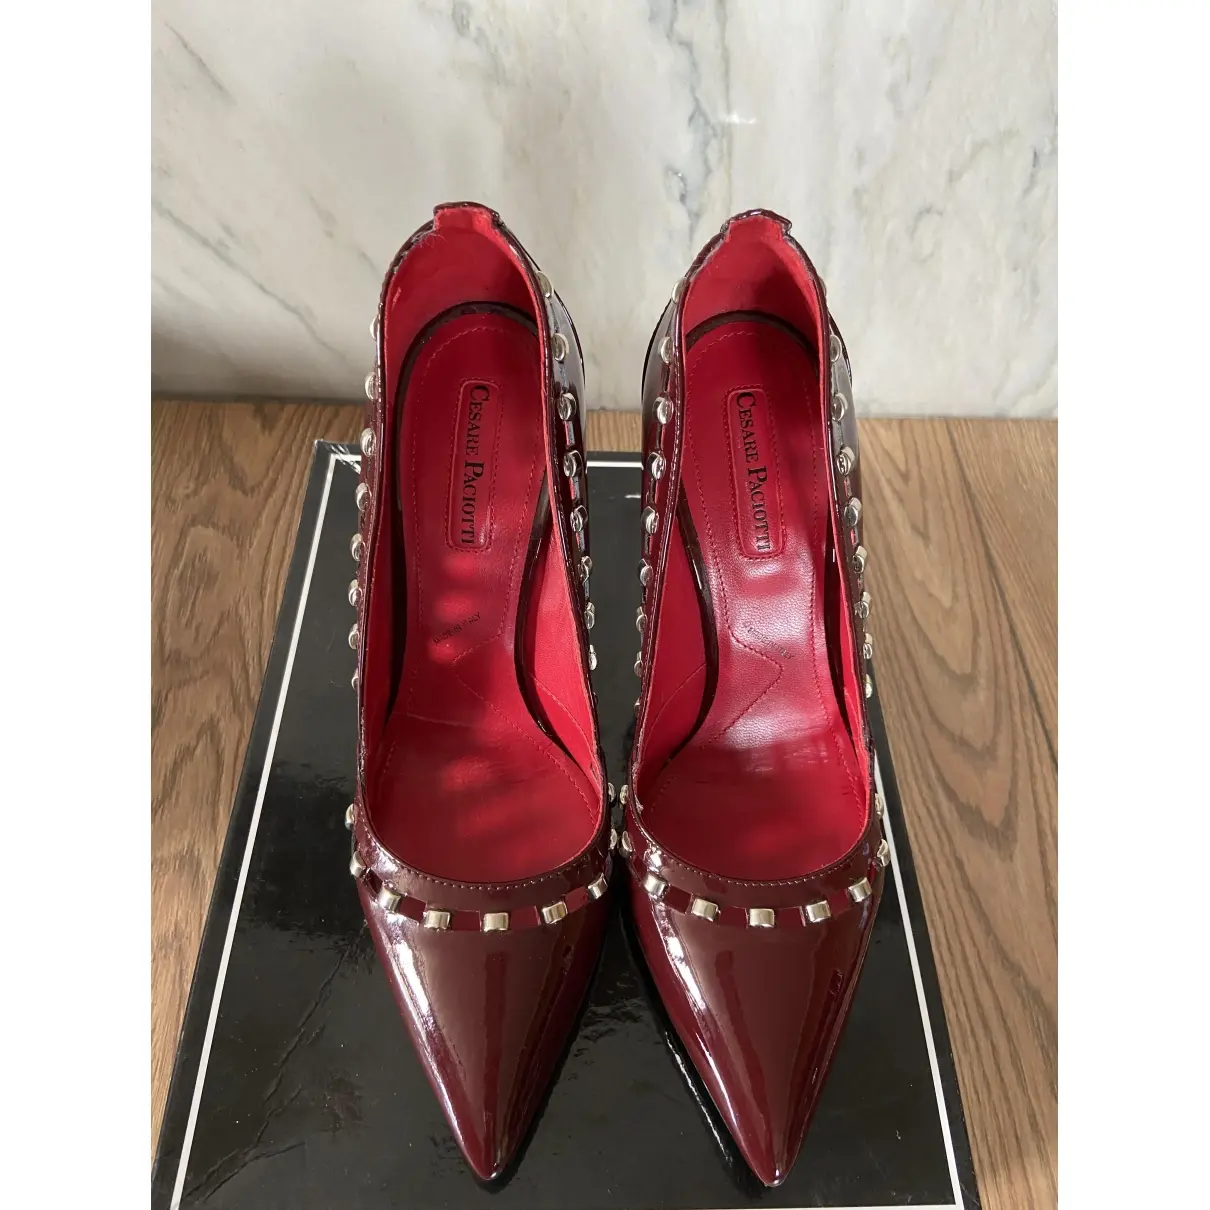 Cesare Paciotti Patent leather heels for sale